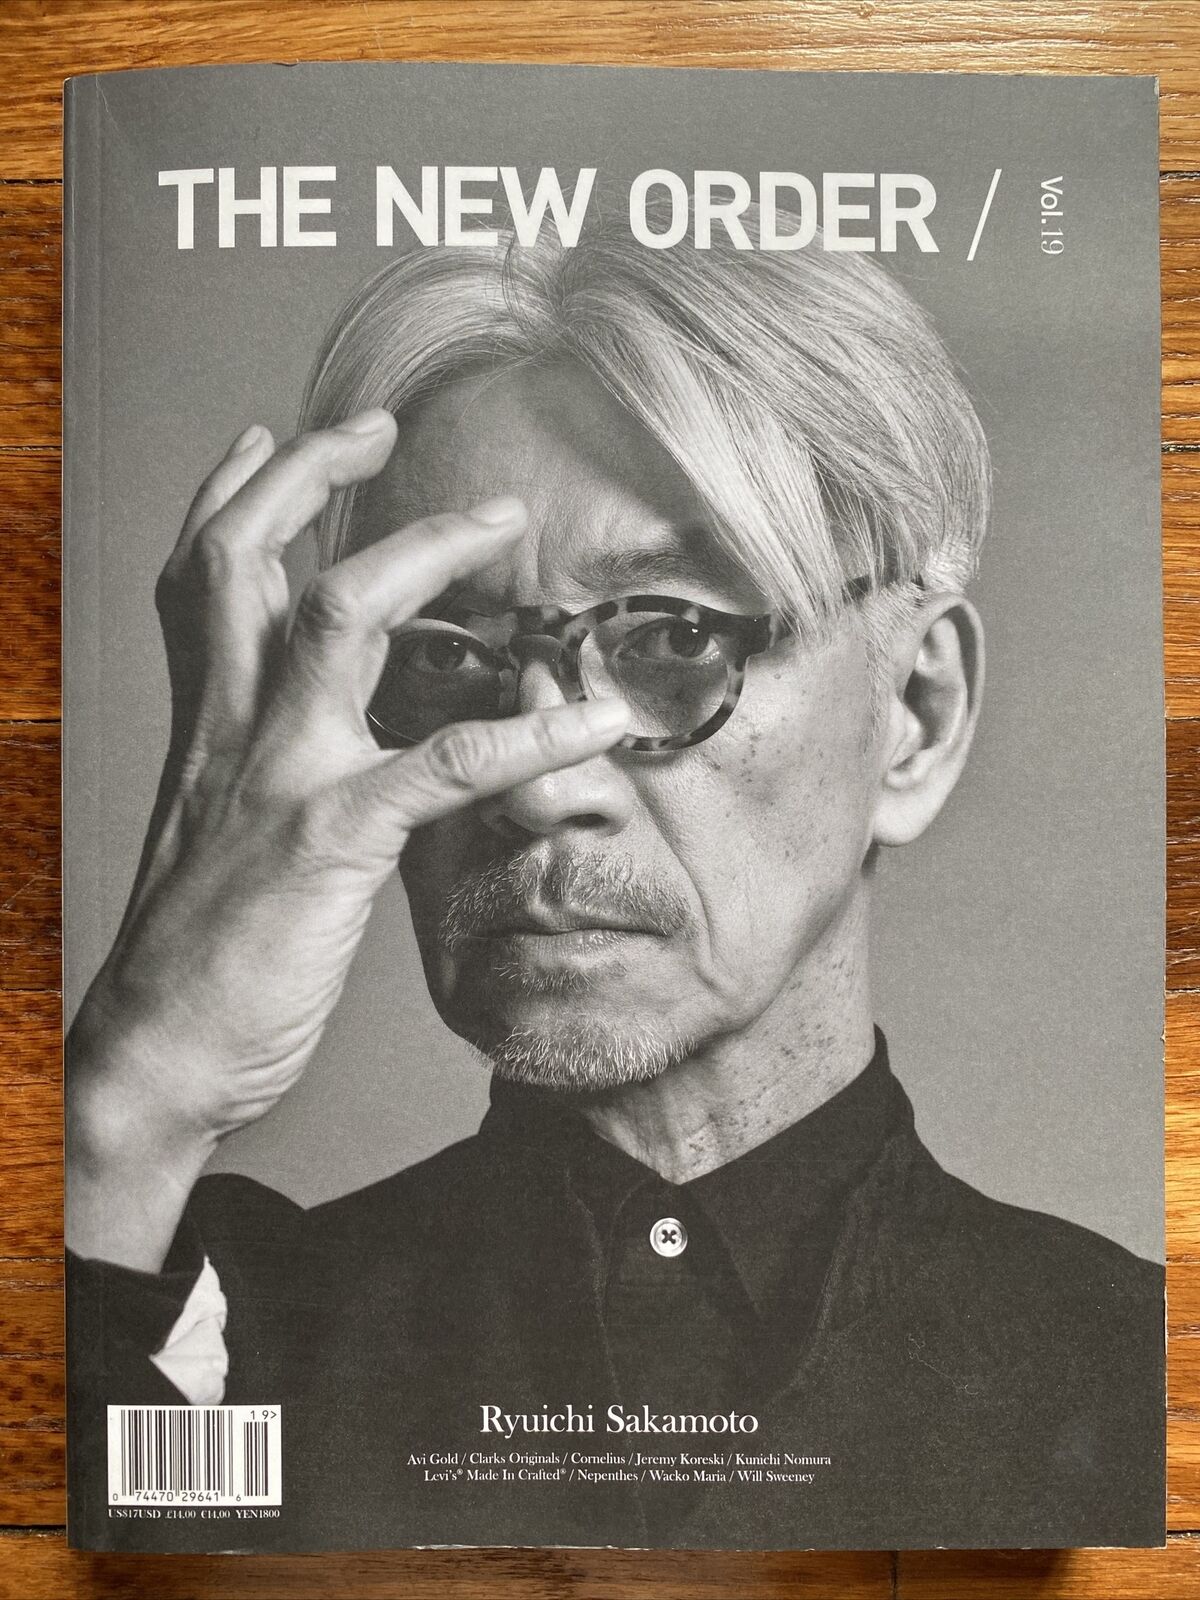 THE NEW ORDER / Vol. 19 Ryuichi Sakamoto cover